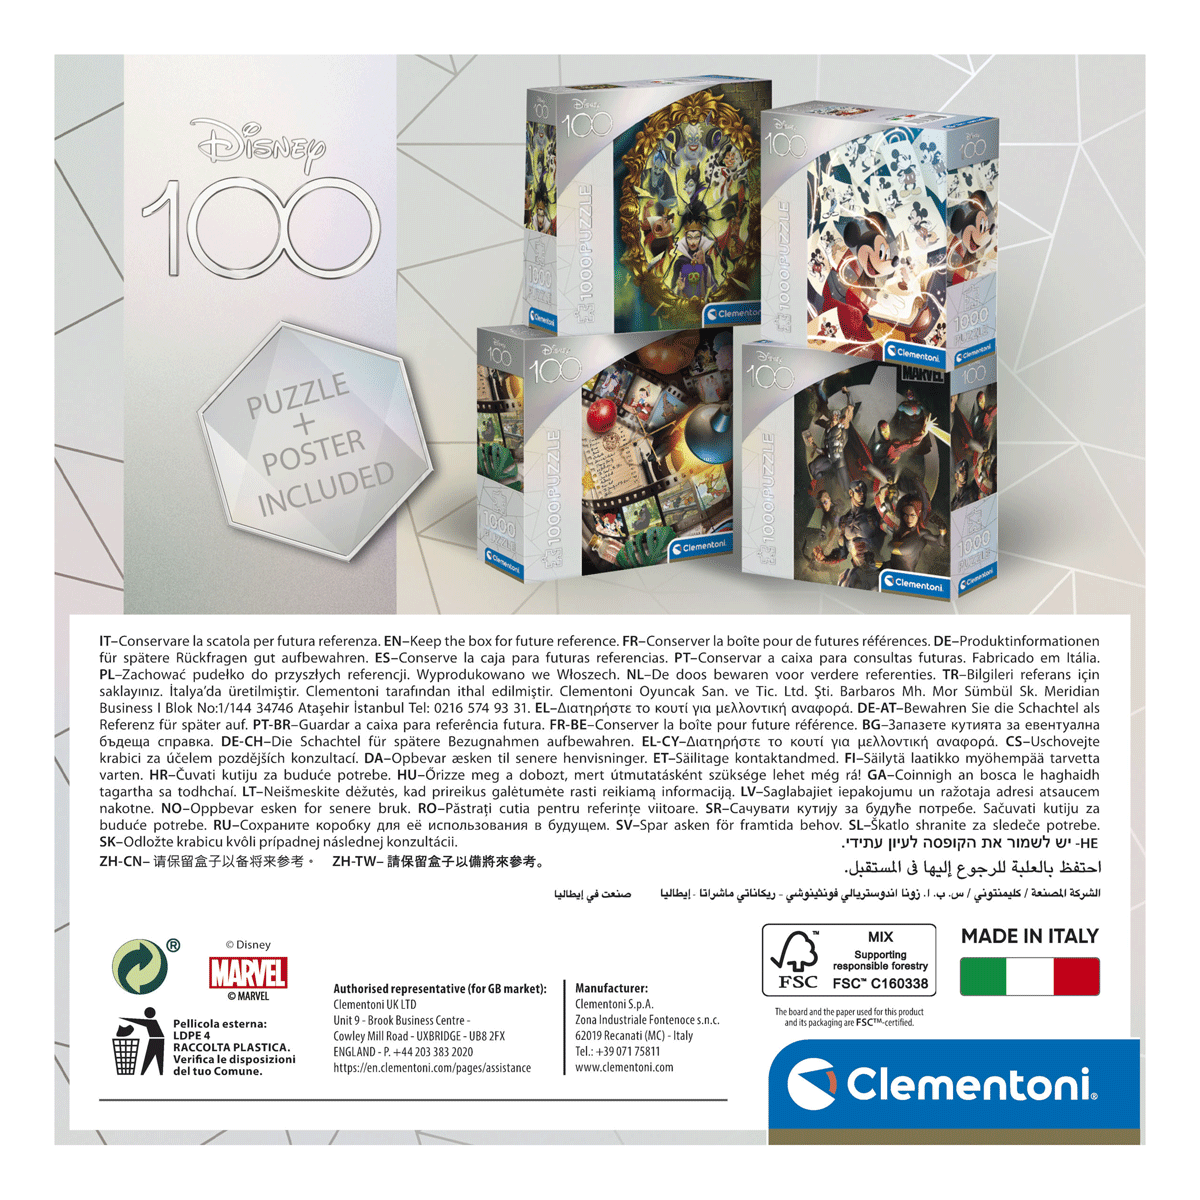 Clementoni - puzzle disney 100 marvel the avengers - puzzle adulti 1000 pezzi - CLEMENTONI